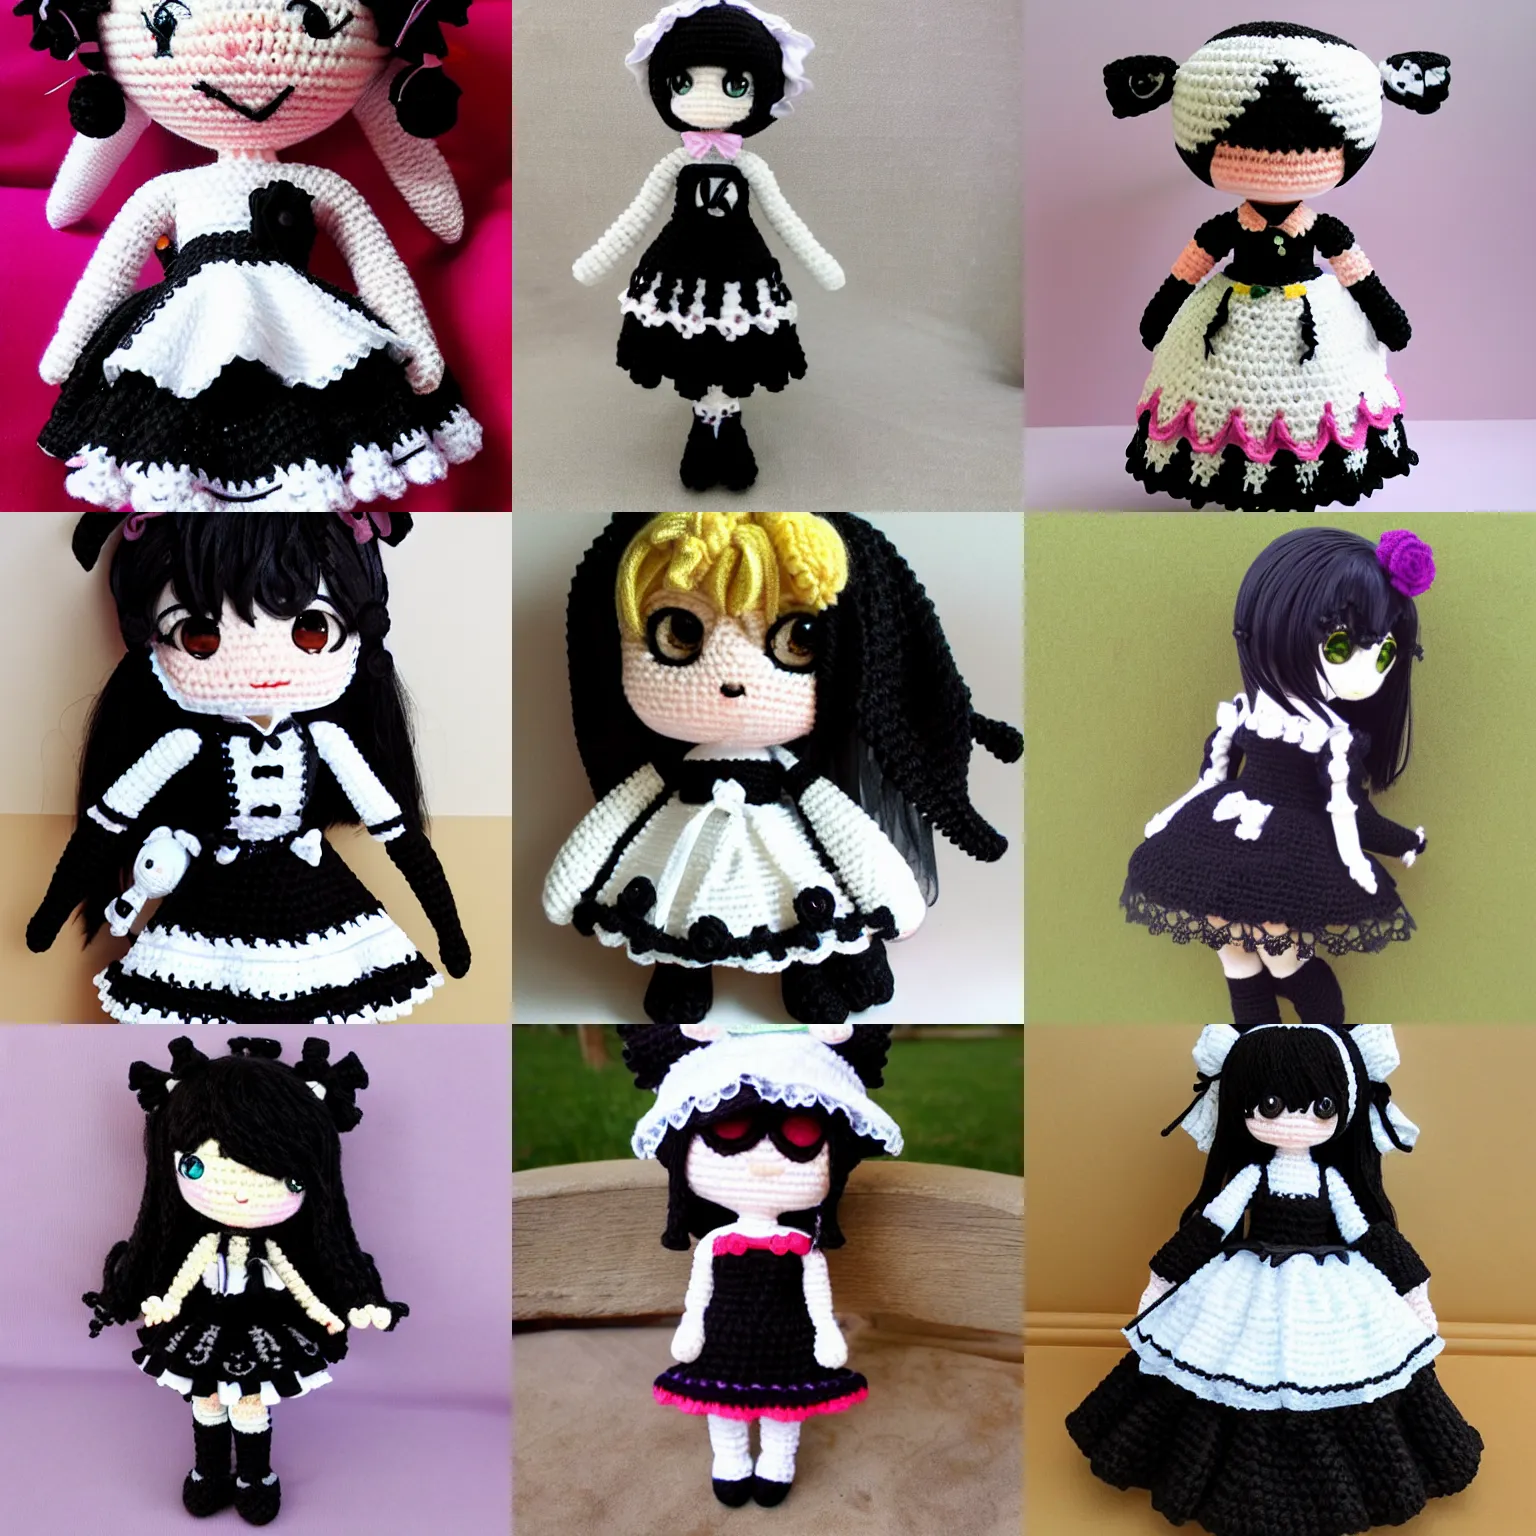 Prompt: amigurumi anime girl wearing gothic lolita dress, amigurumi